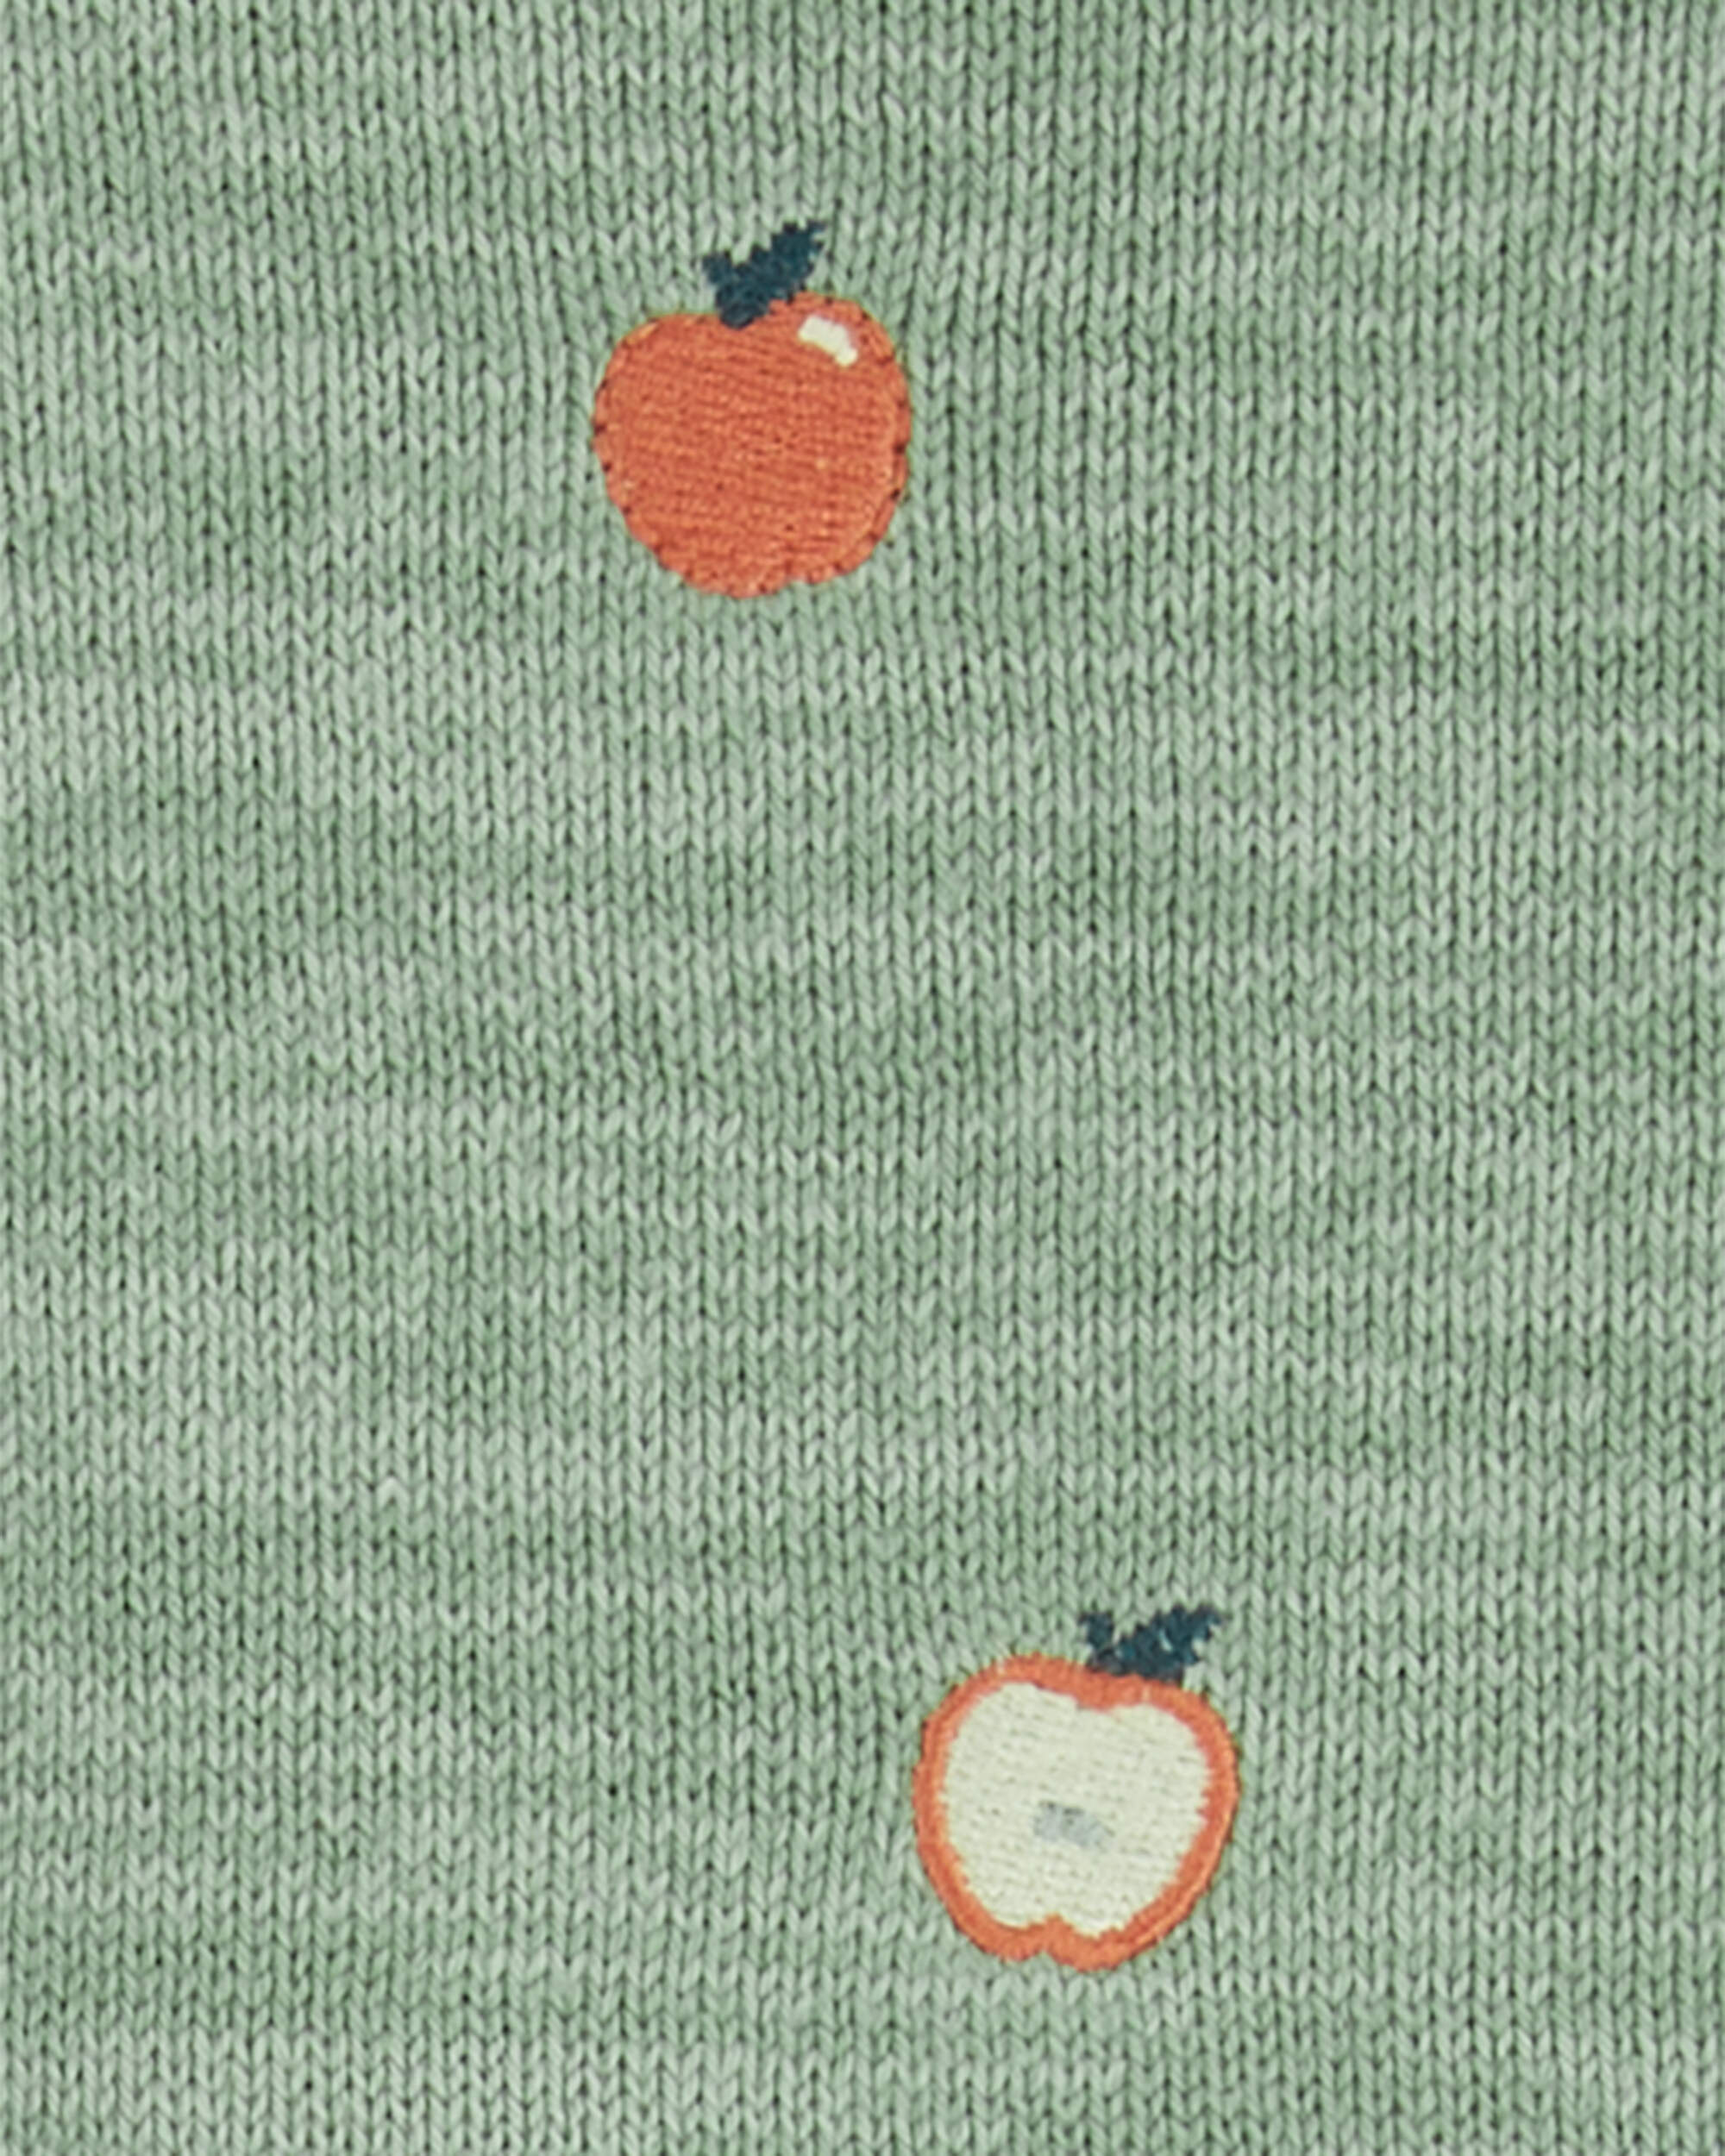 Baby 2-Piece Apple Sweater & Denim Pant Set